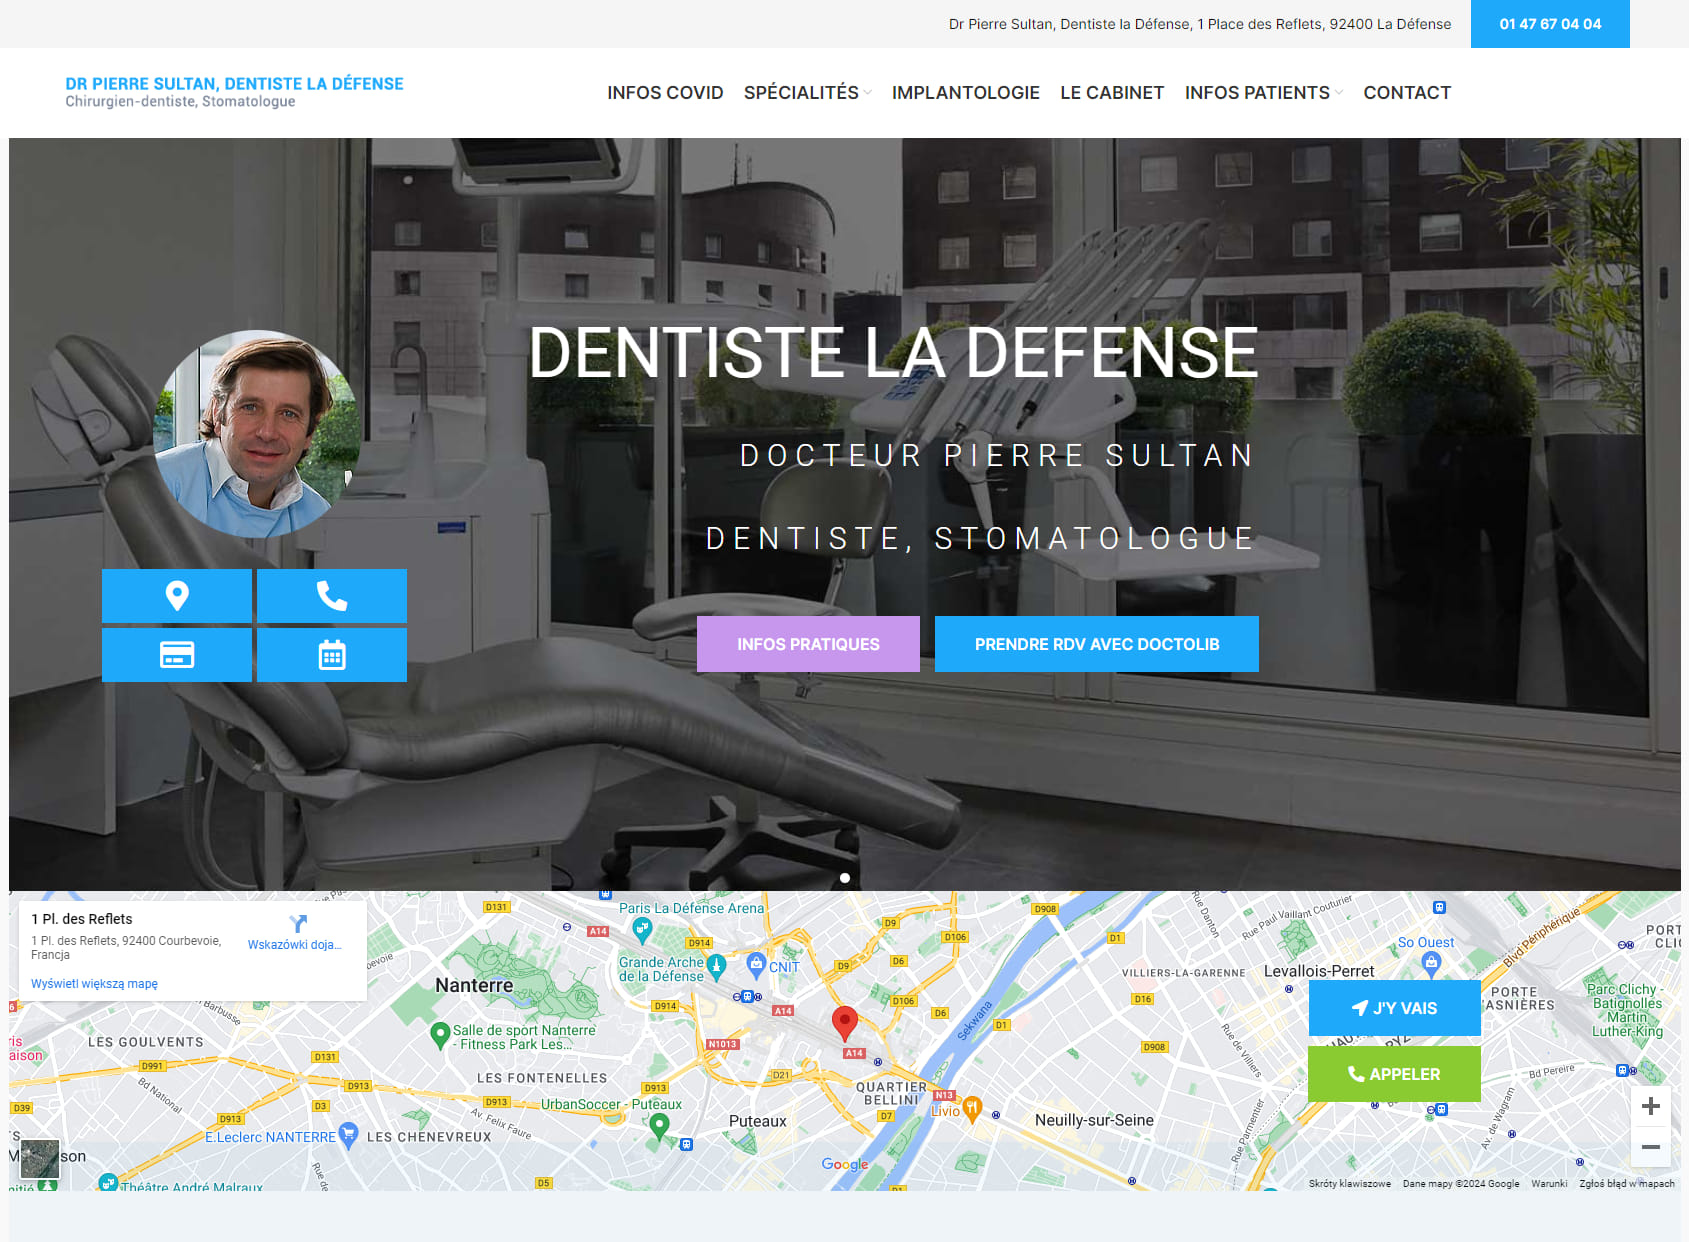 Dentist Defense - Dr. Pierre Sultan